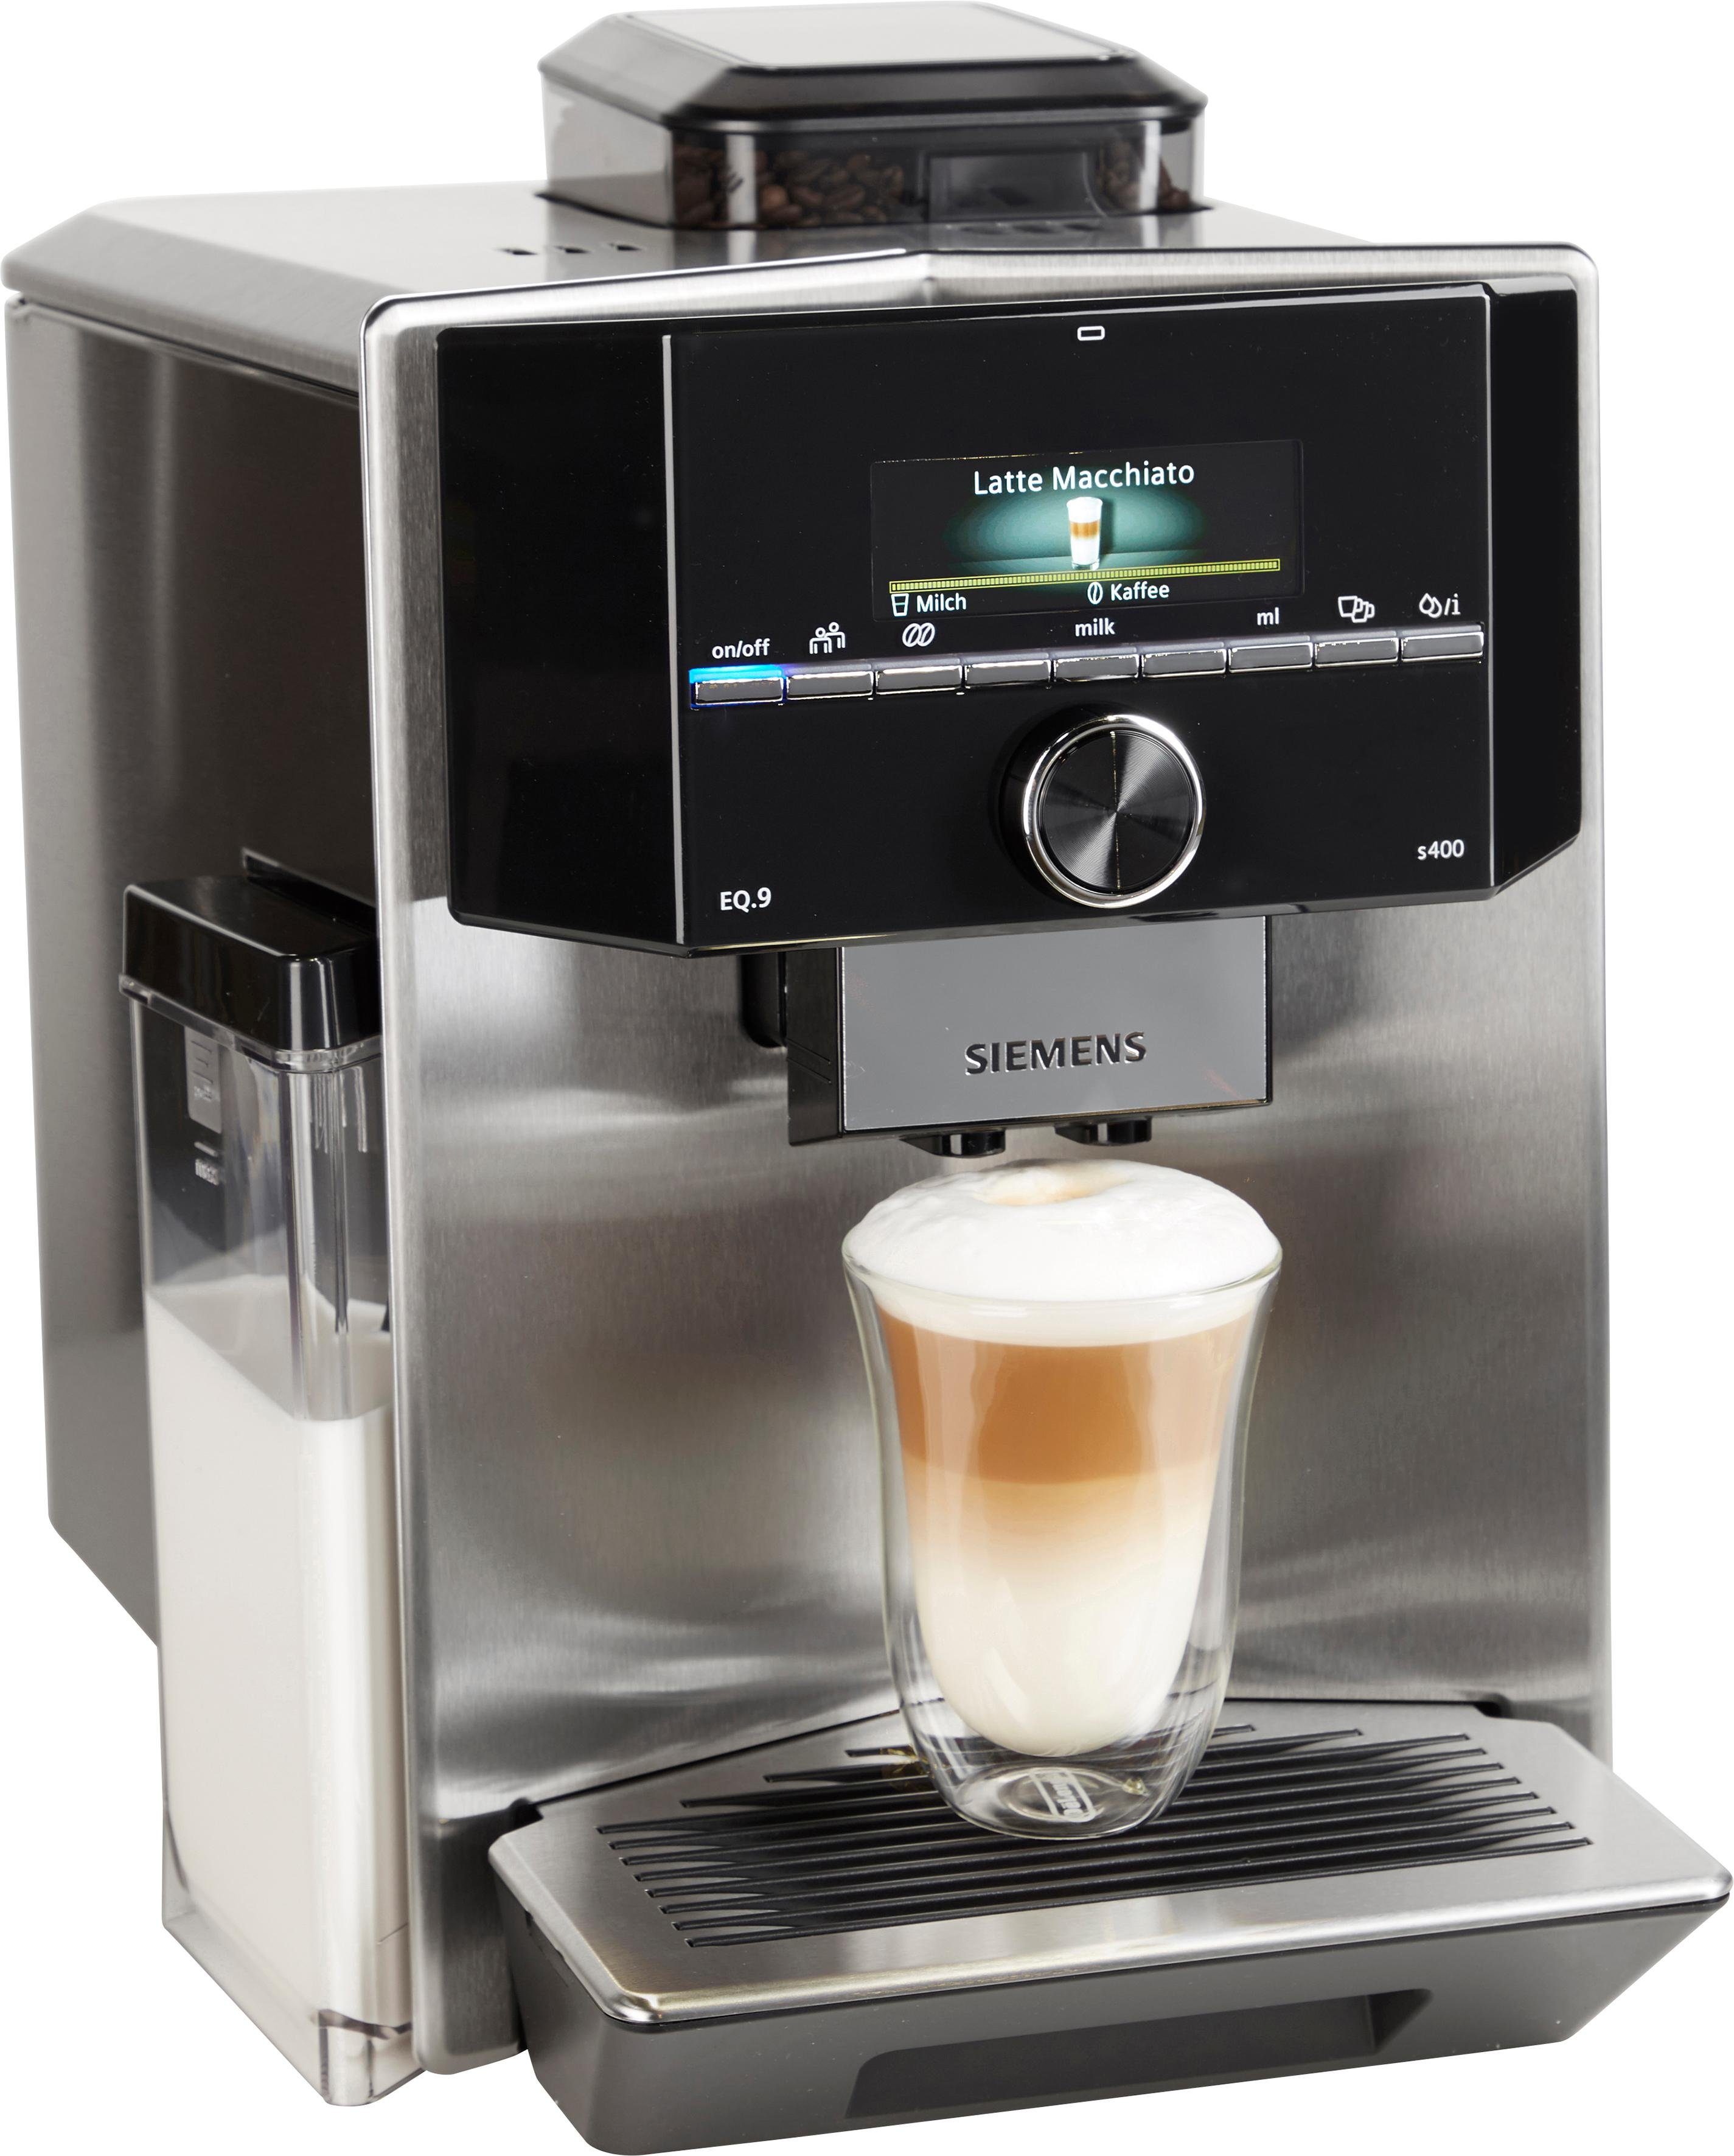 SIEMENS Volautomatisch koffiezetapparaat EQ.9 s400 TI924501DE